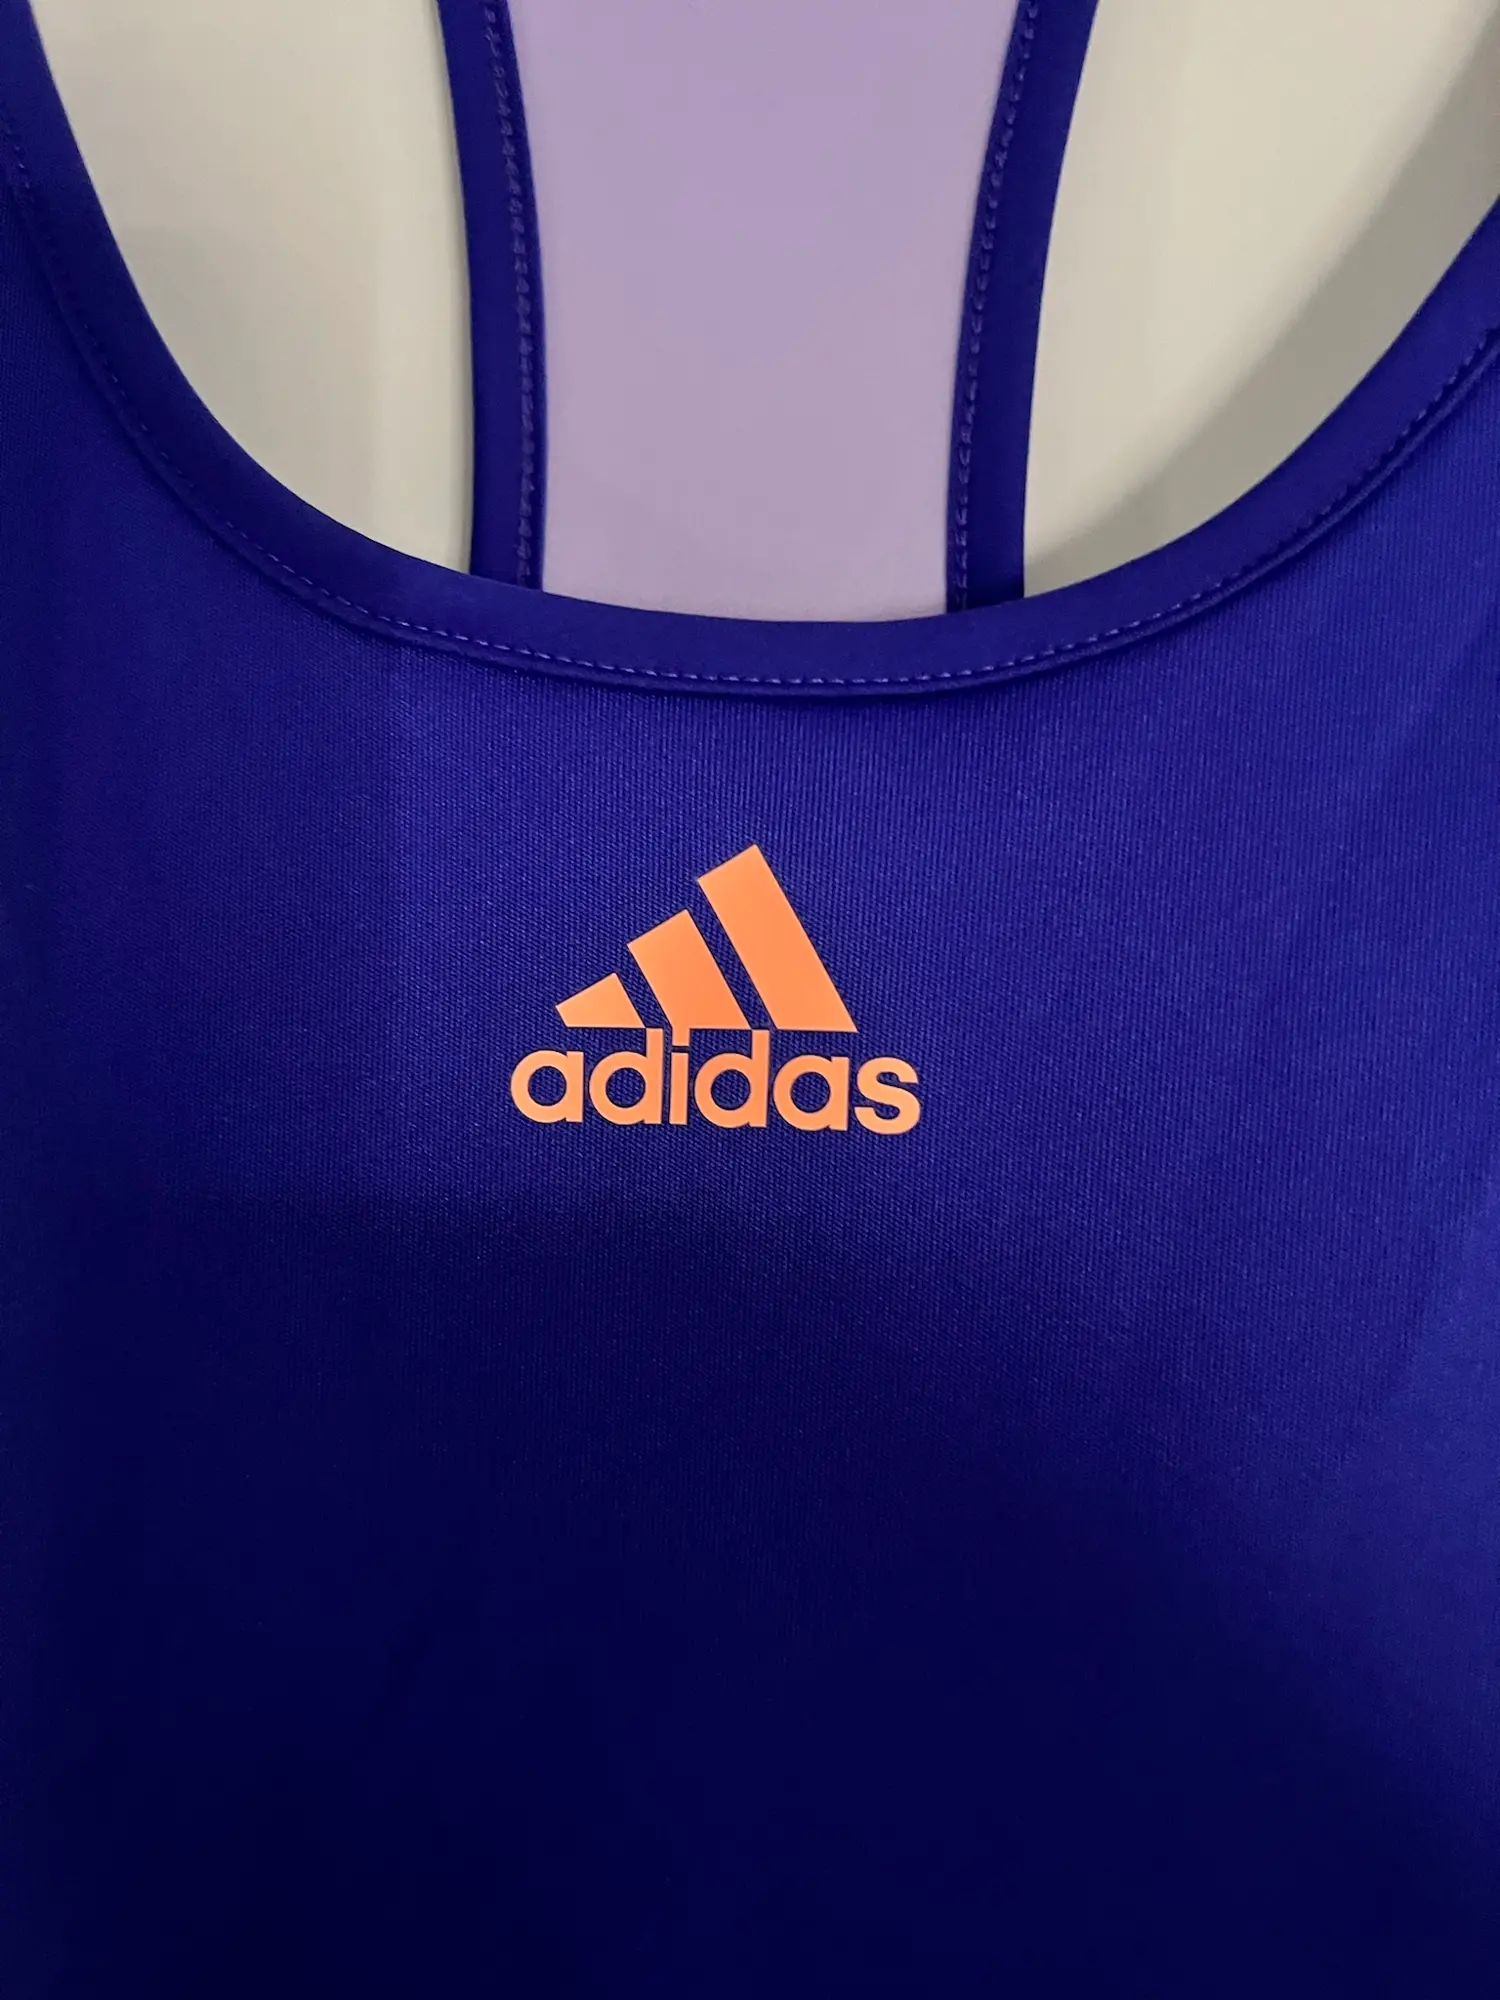 Adidas andet sportstøj